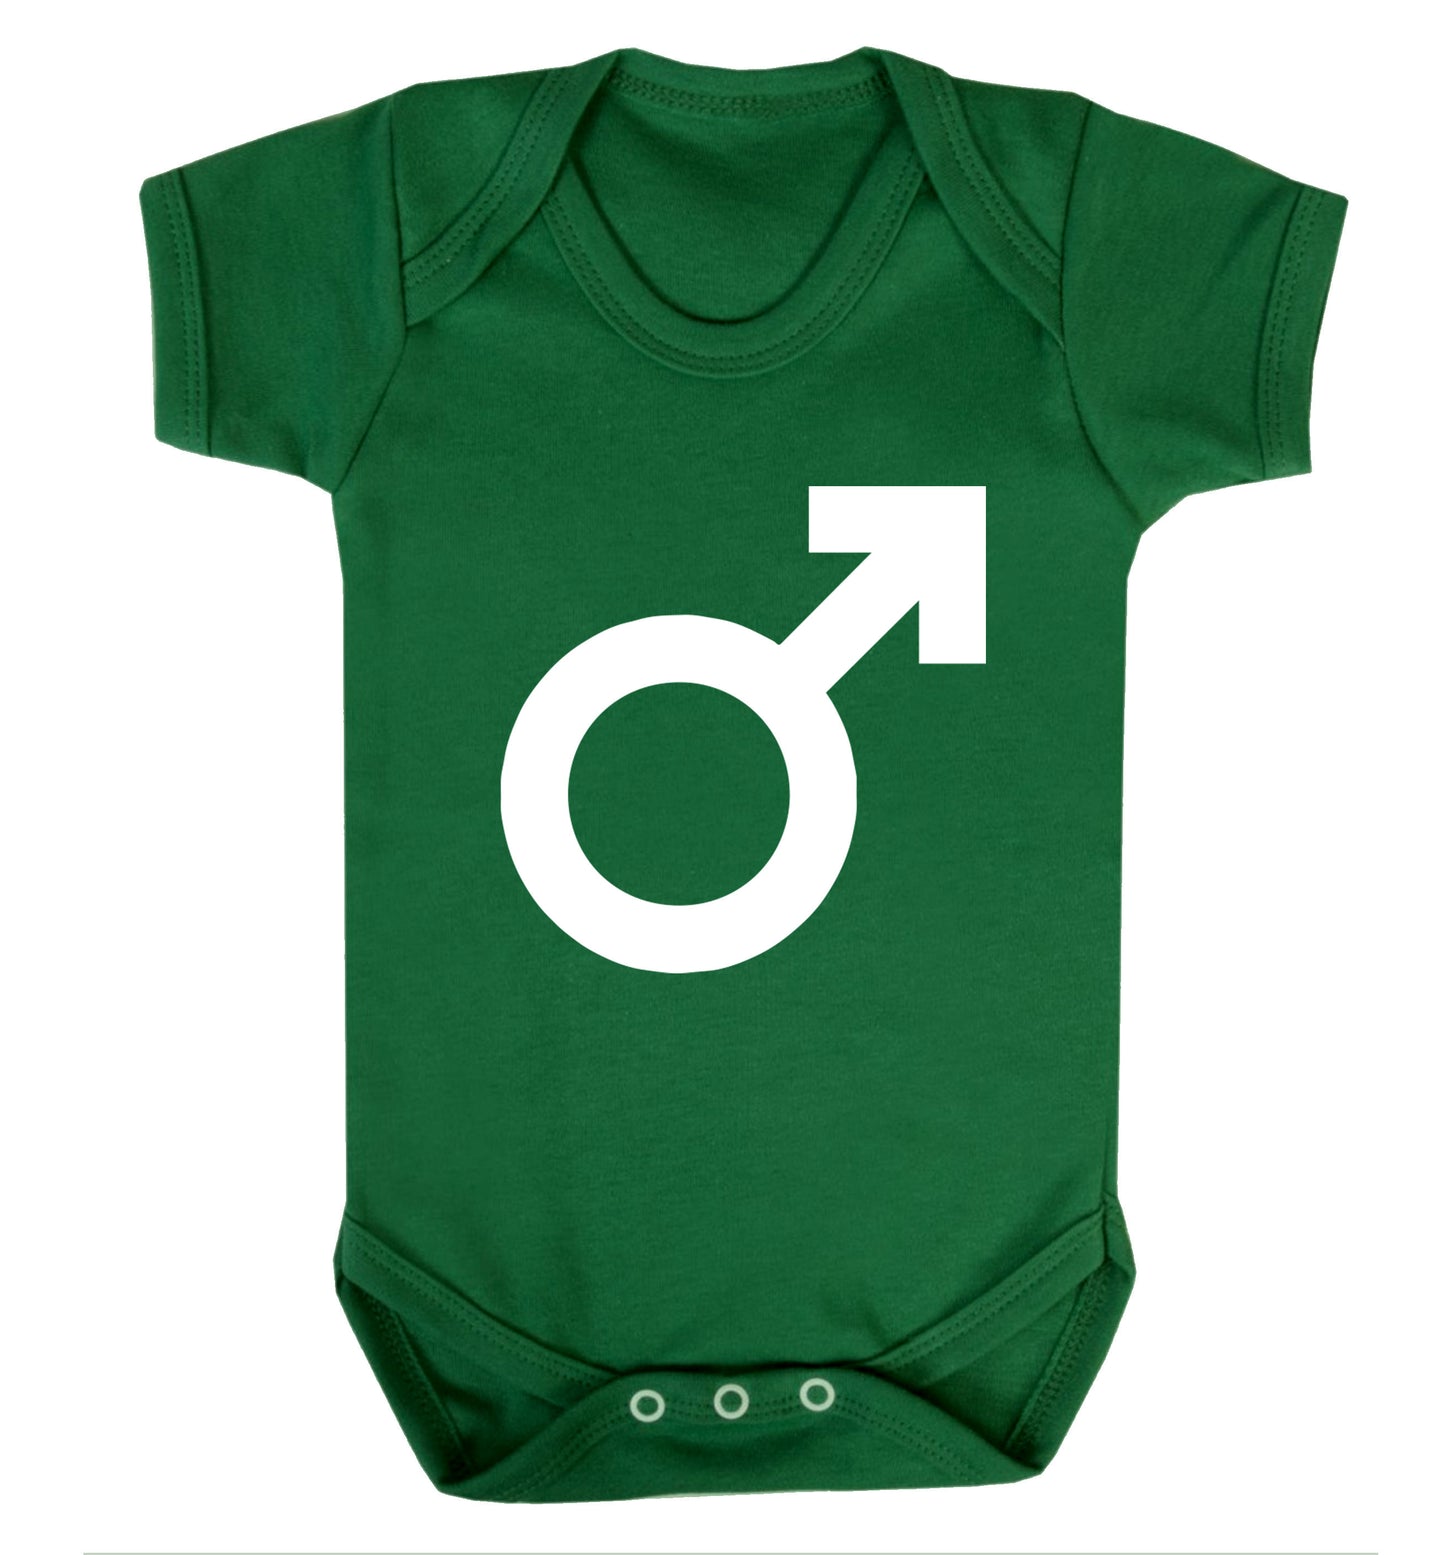 Male symbol large Baby Vest green 18-24 months